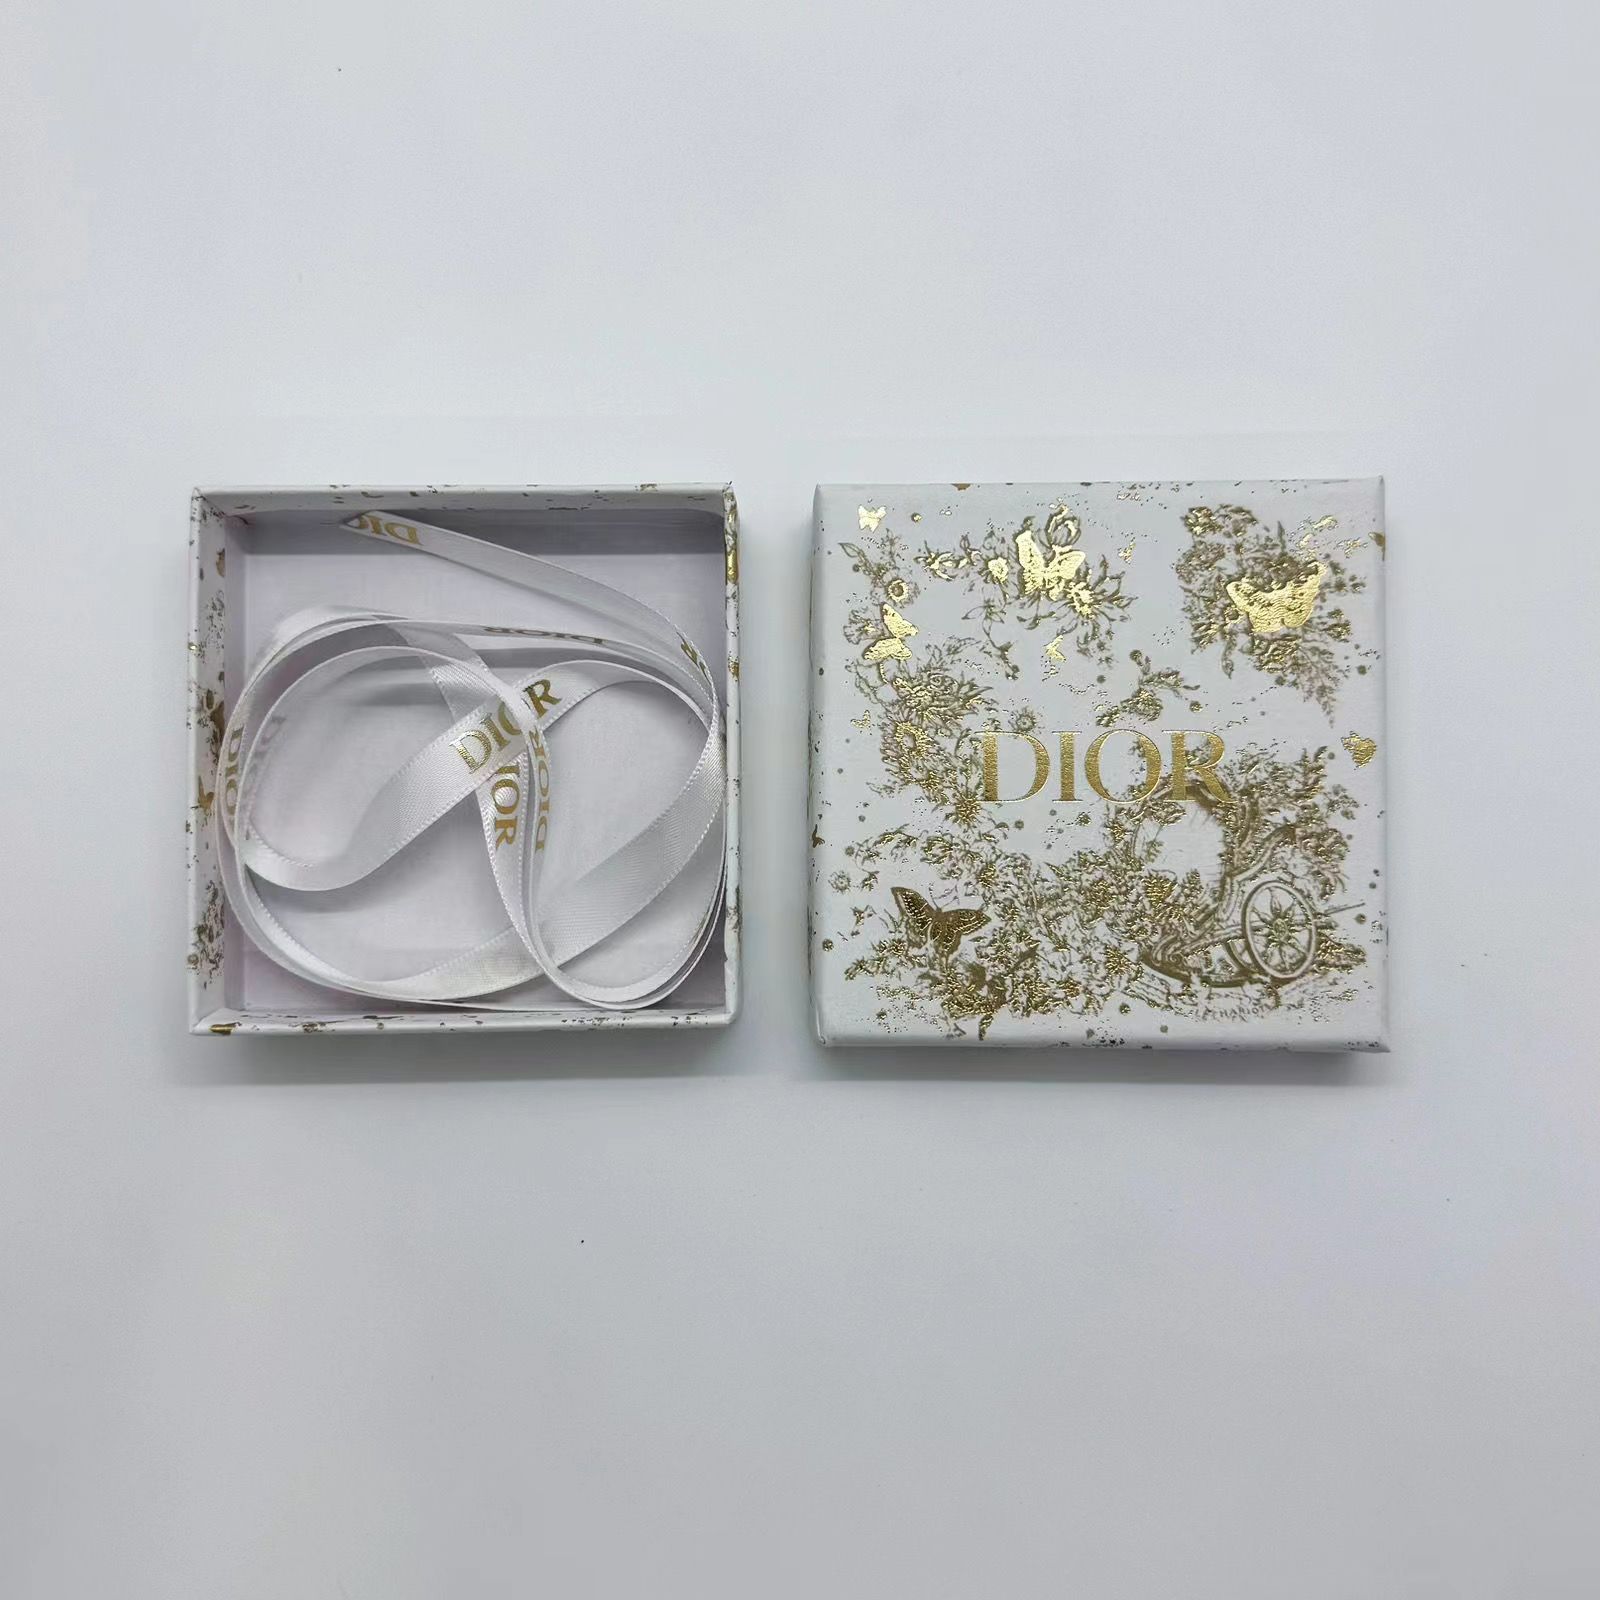 Dior jewelry box one set